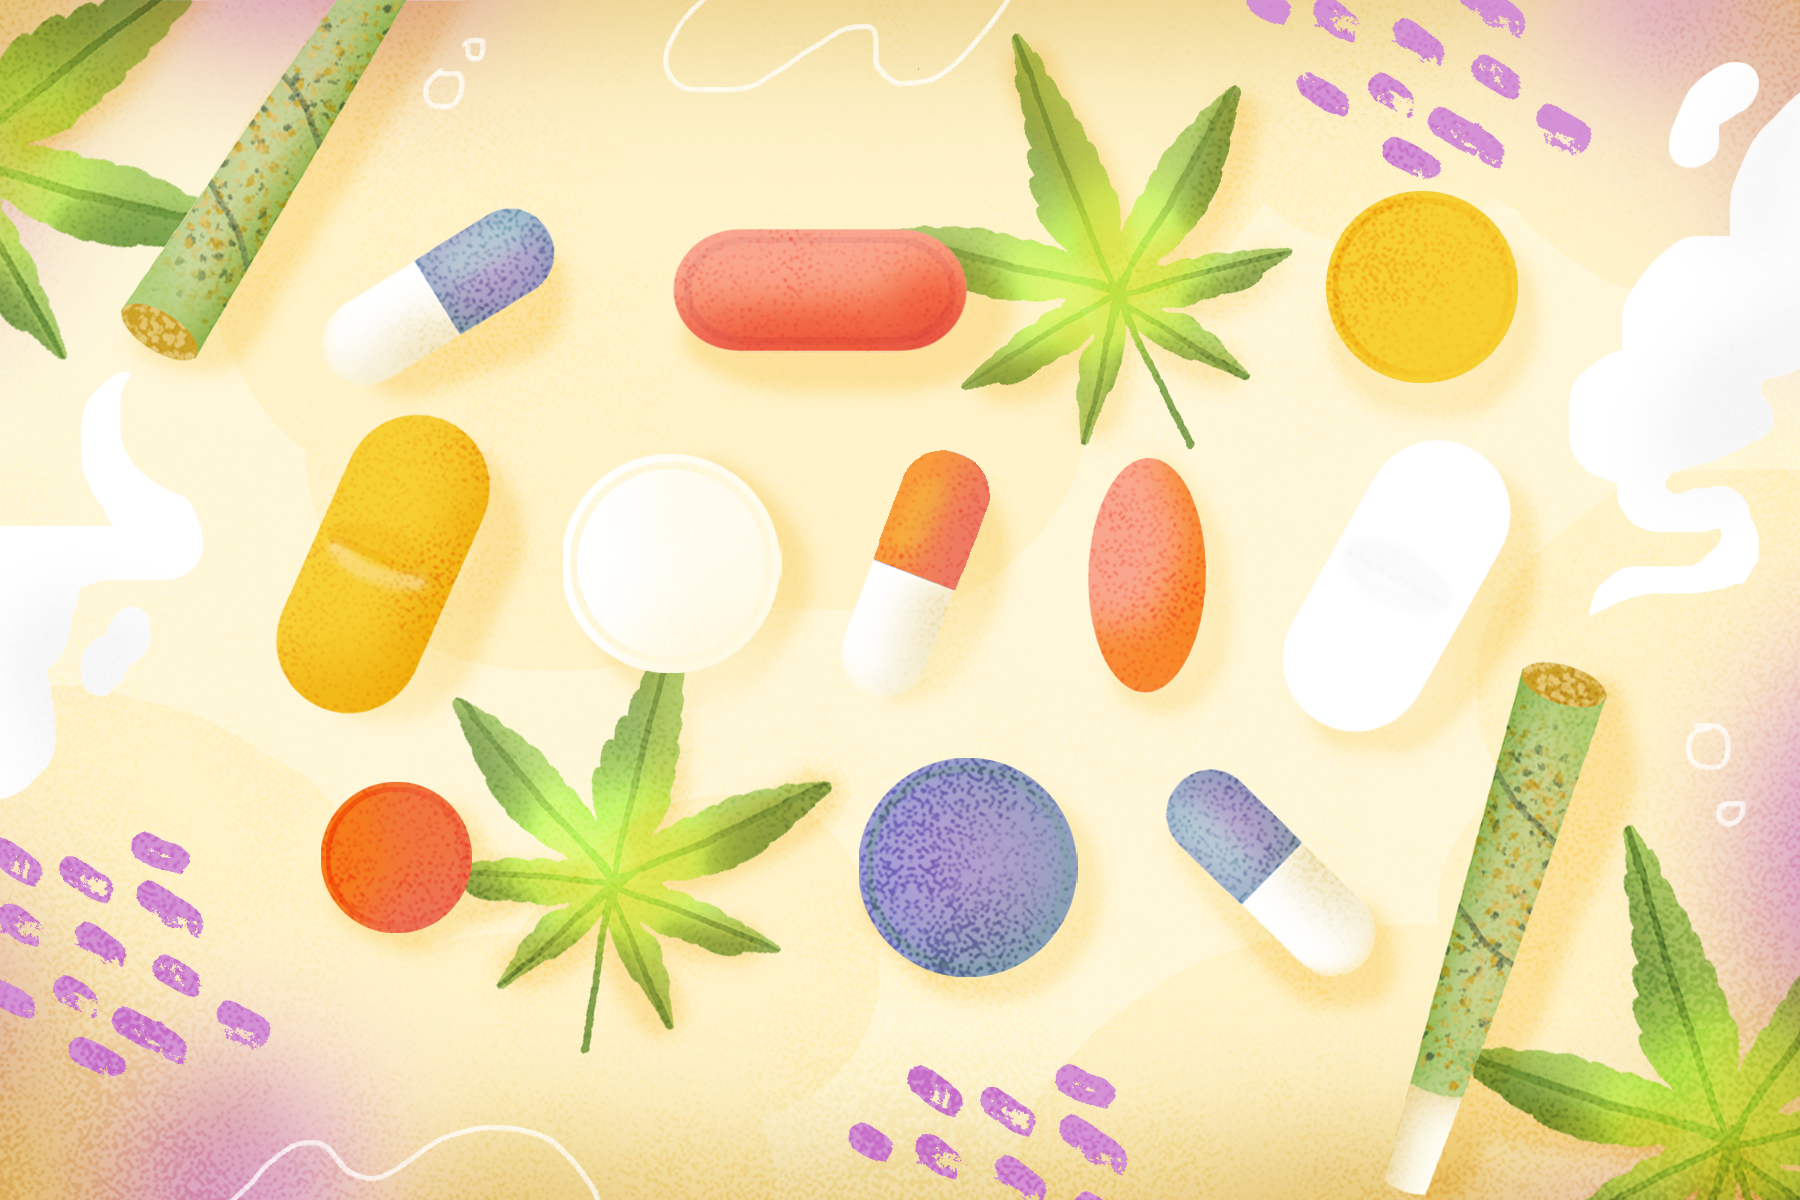 Can I Use Marijuana Instead of Antidepressants?